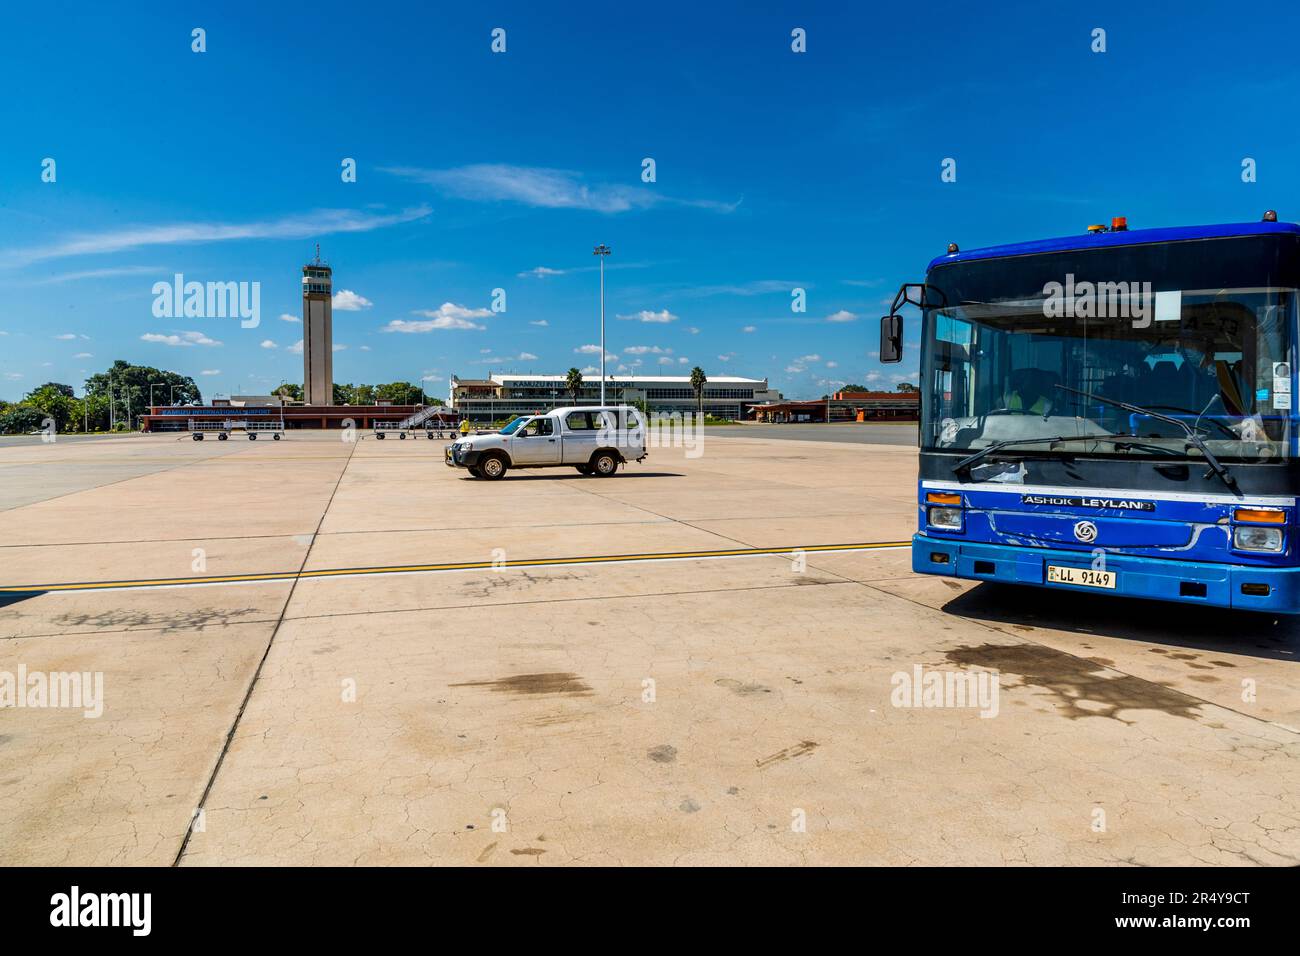 On the tarmac of Kamuzu International Airport in Lilongwe, Malawi. Lilongwe Airport, capital of Malawi, also Kamuzu Airport, named after the first president Hastings Kamuzu Banda Stock Photo